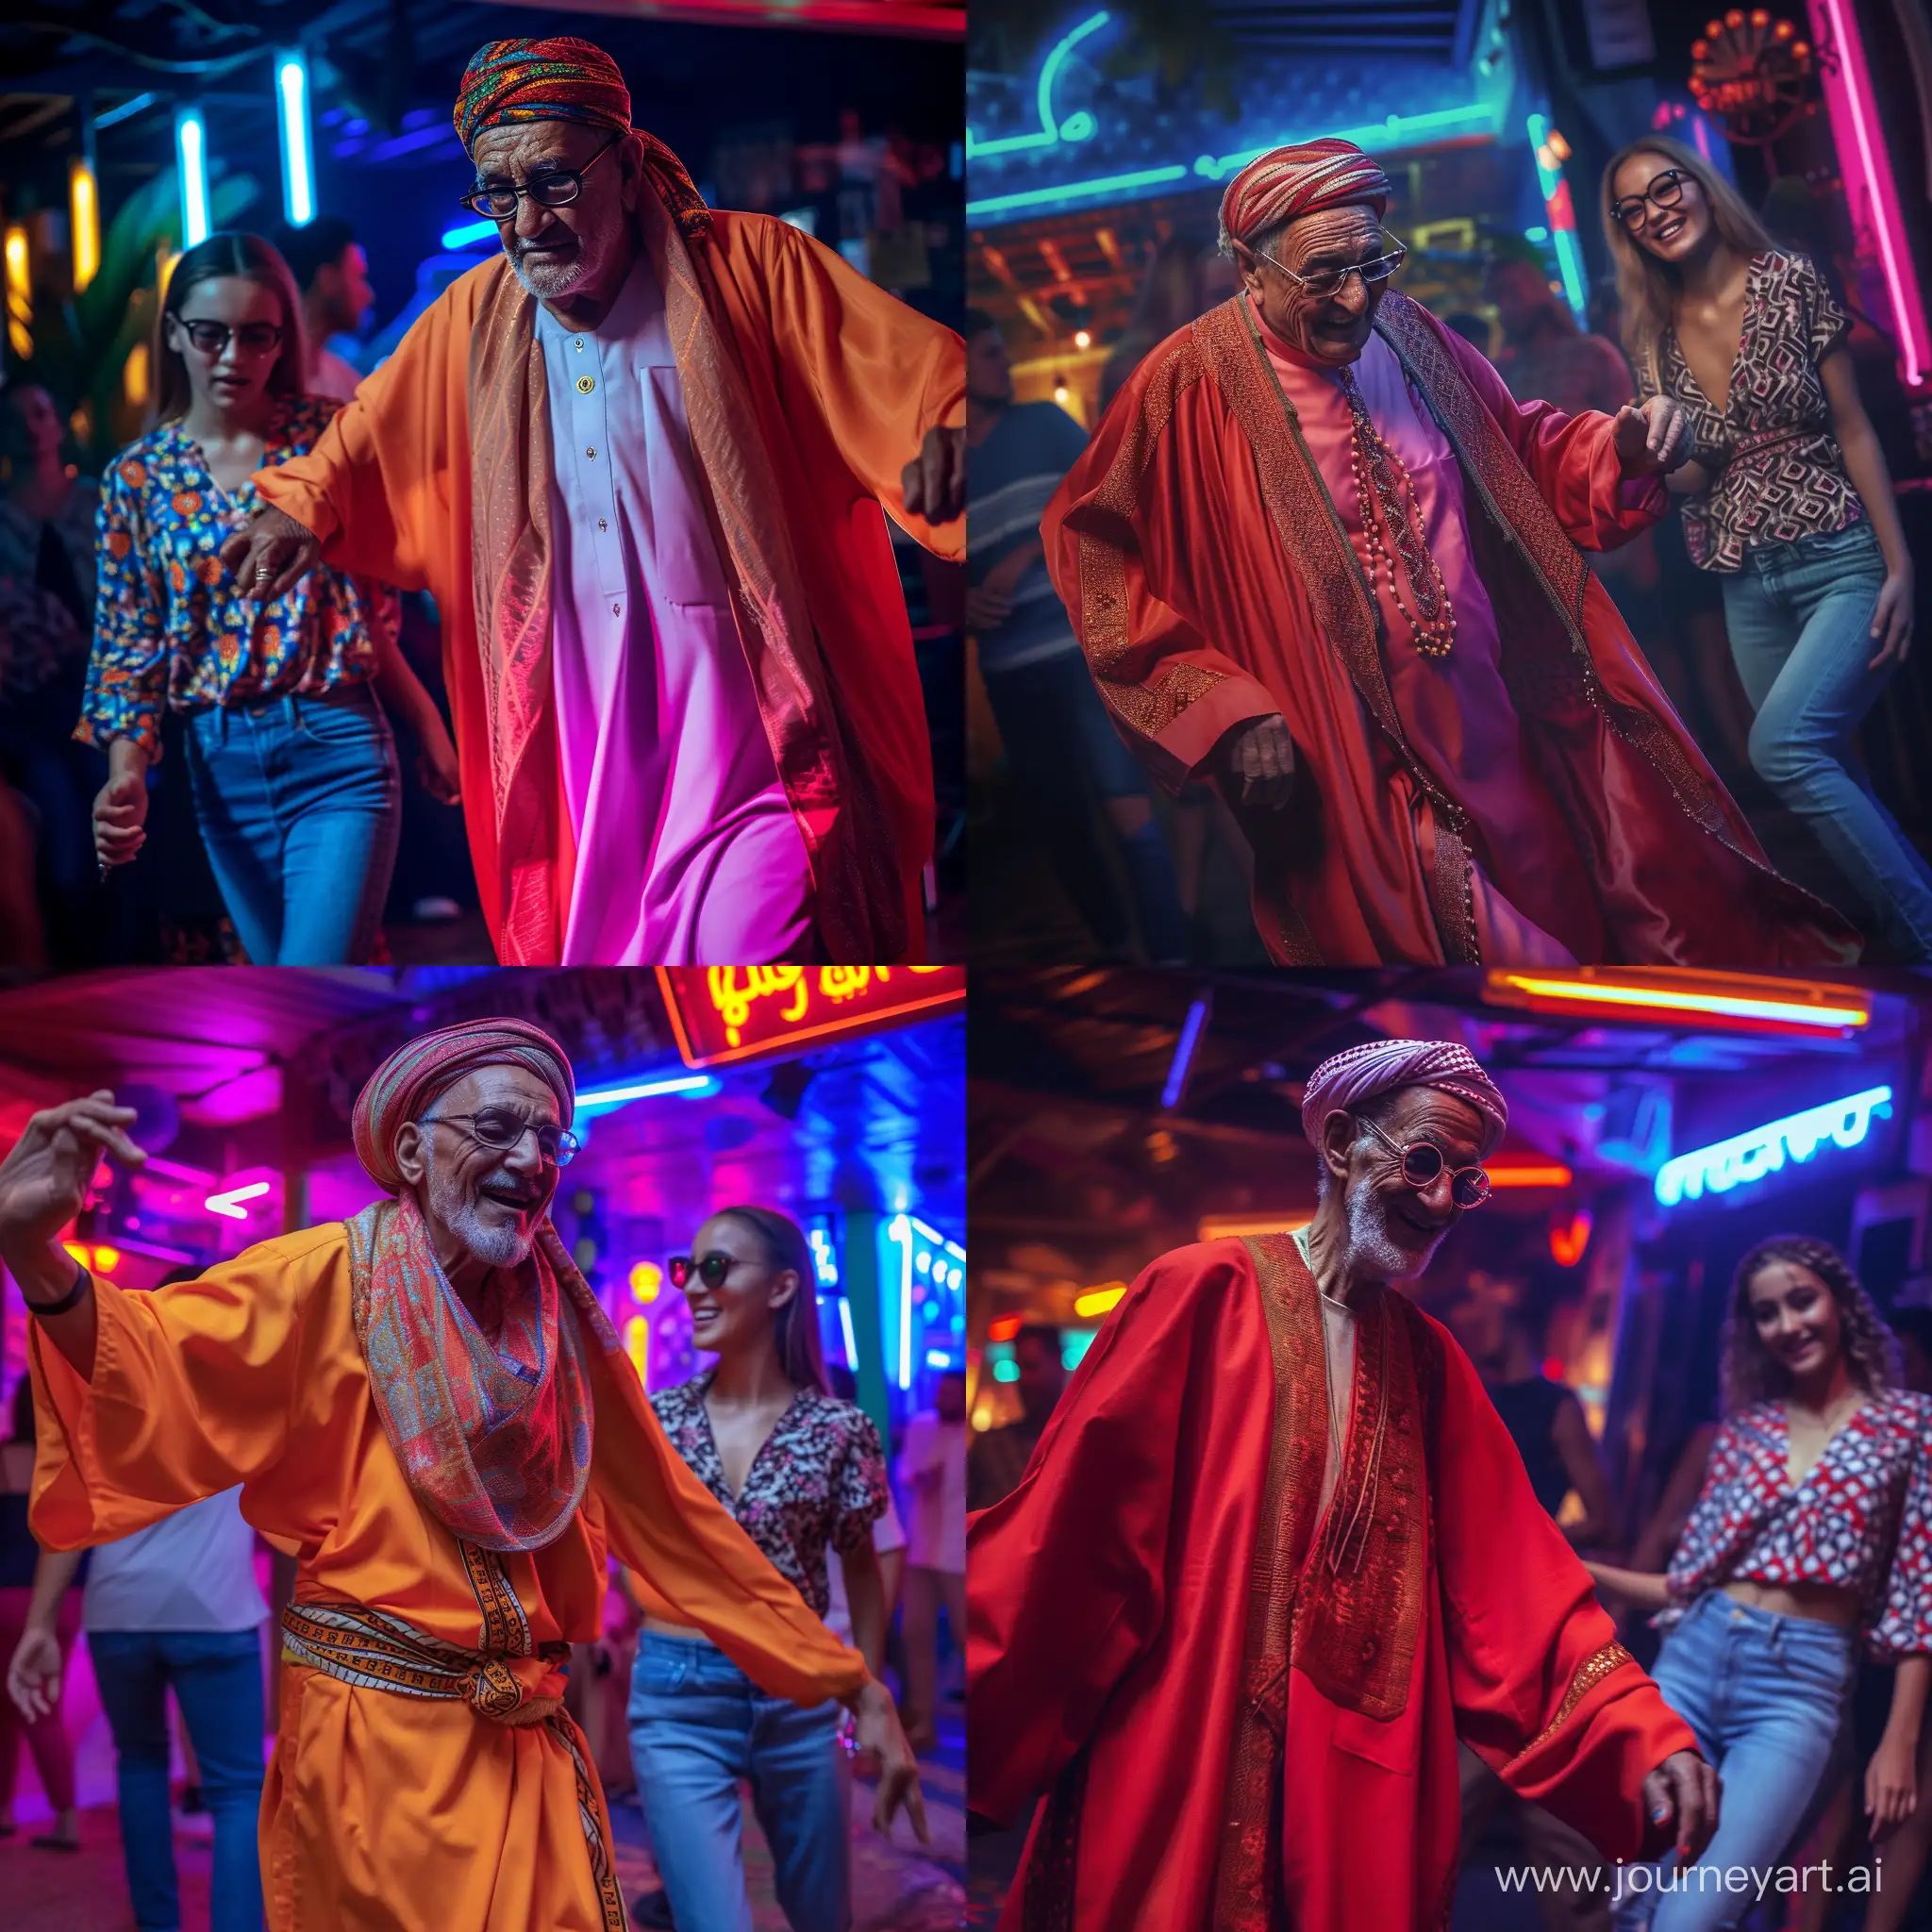 Vibrant-Nightclub-Celebration-Moroccan-Elder-and-Youthful-Dancer